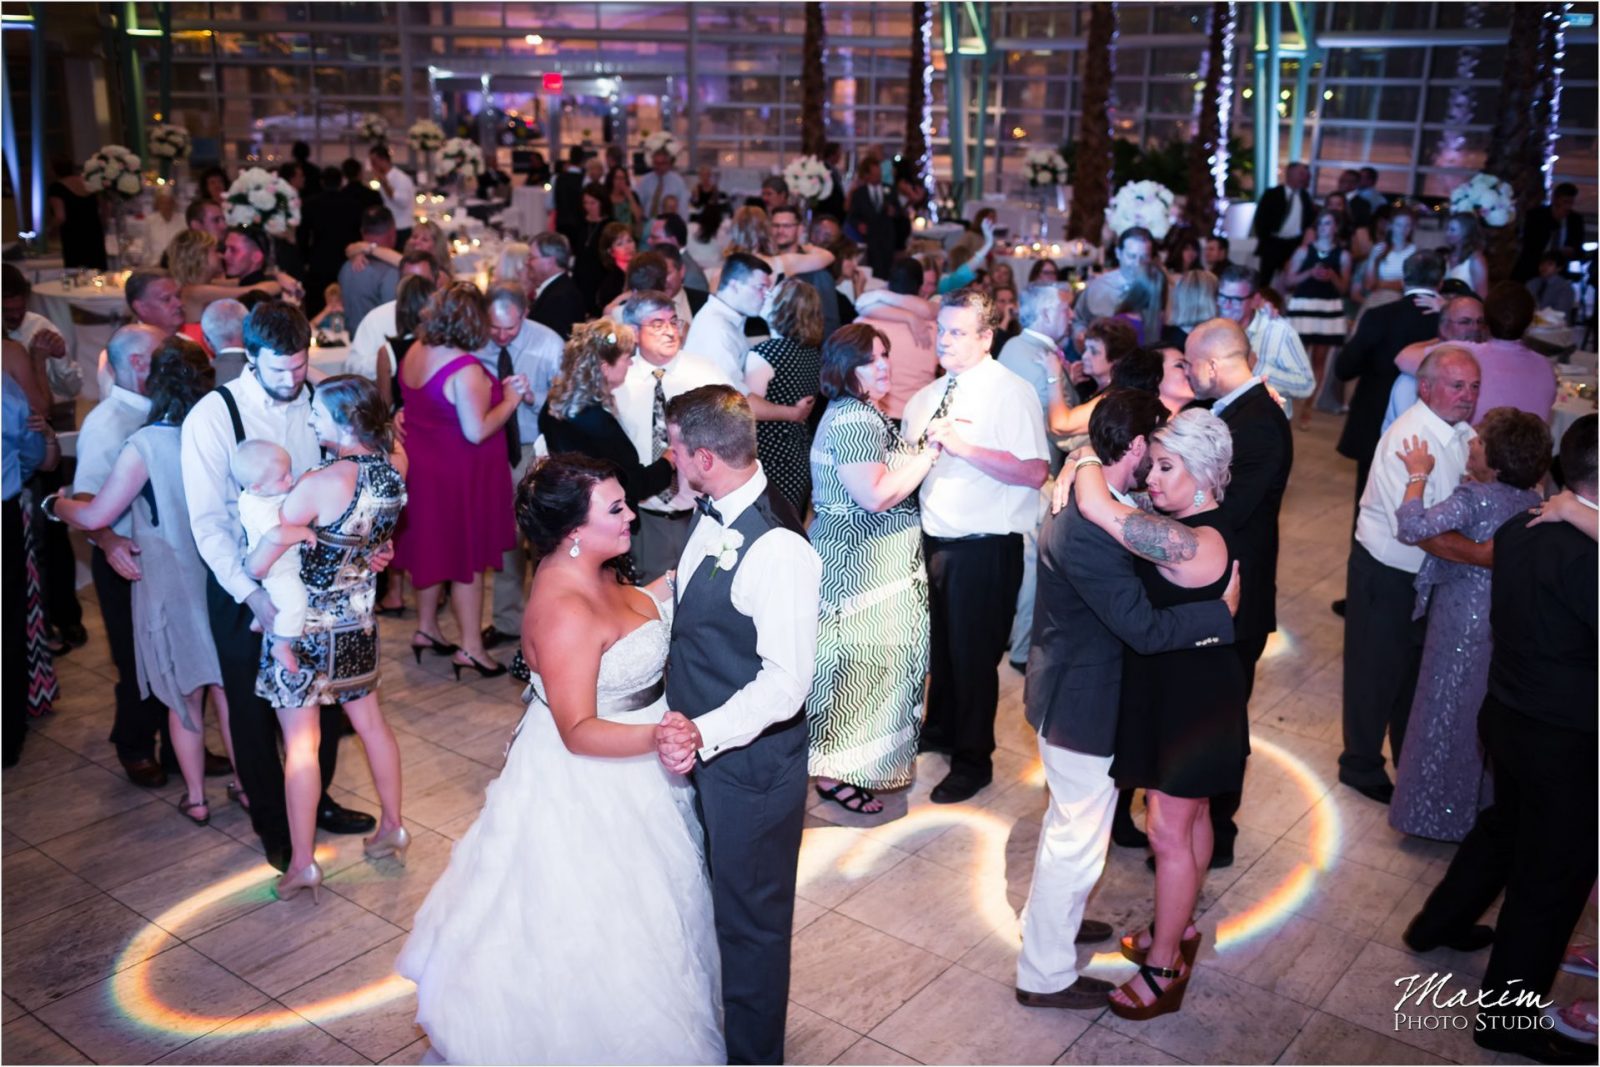 Group Photo Schuster Center Wedding reception dance